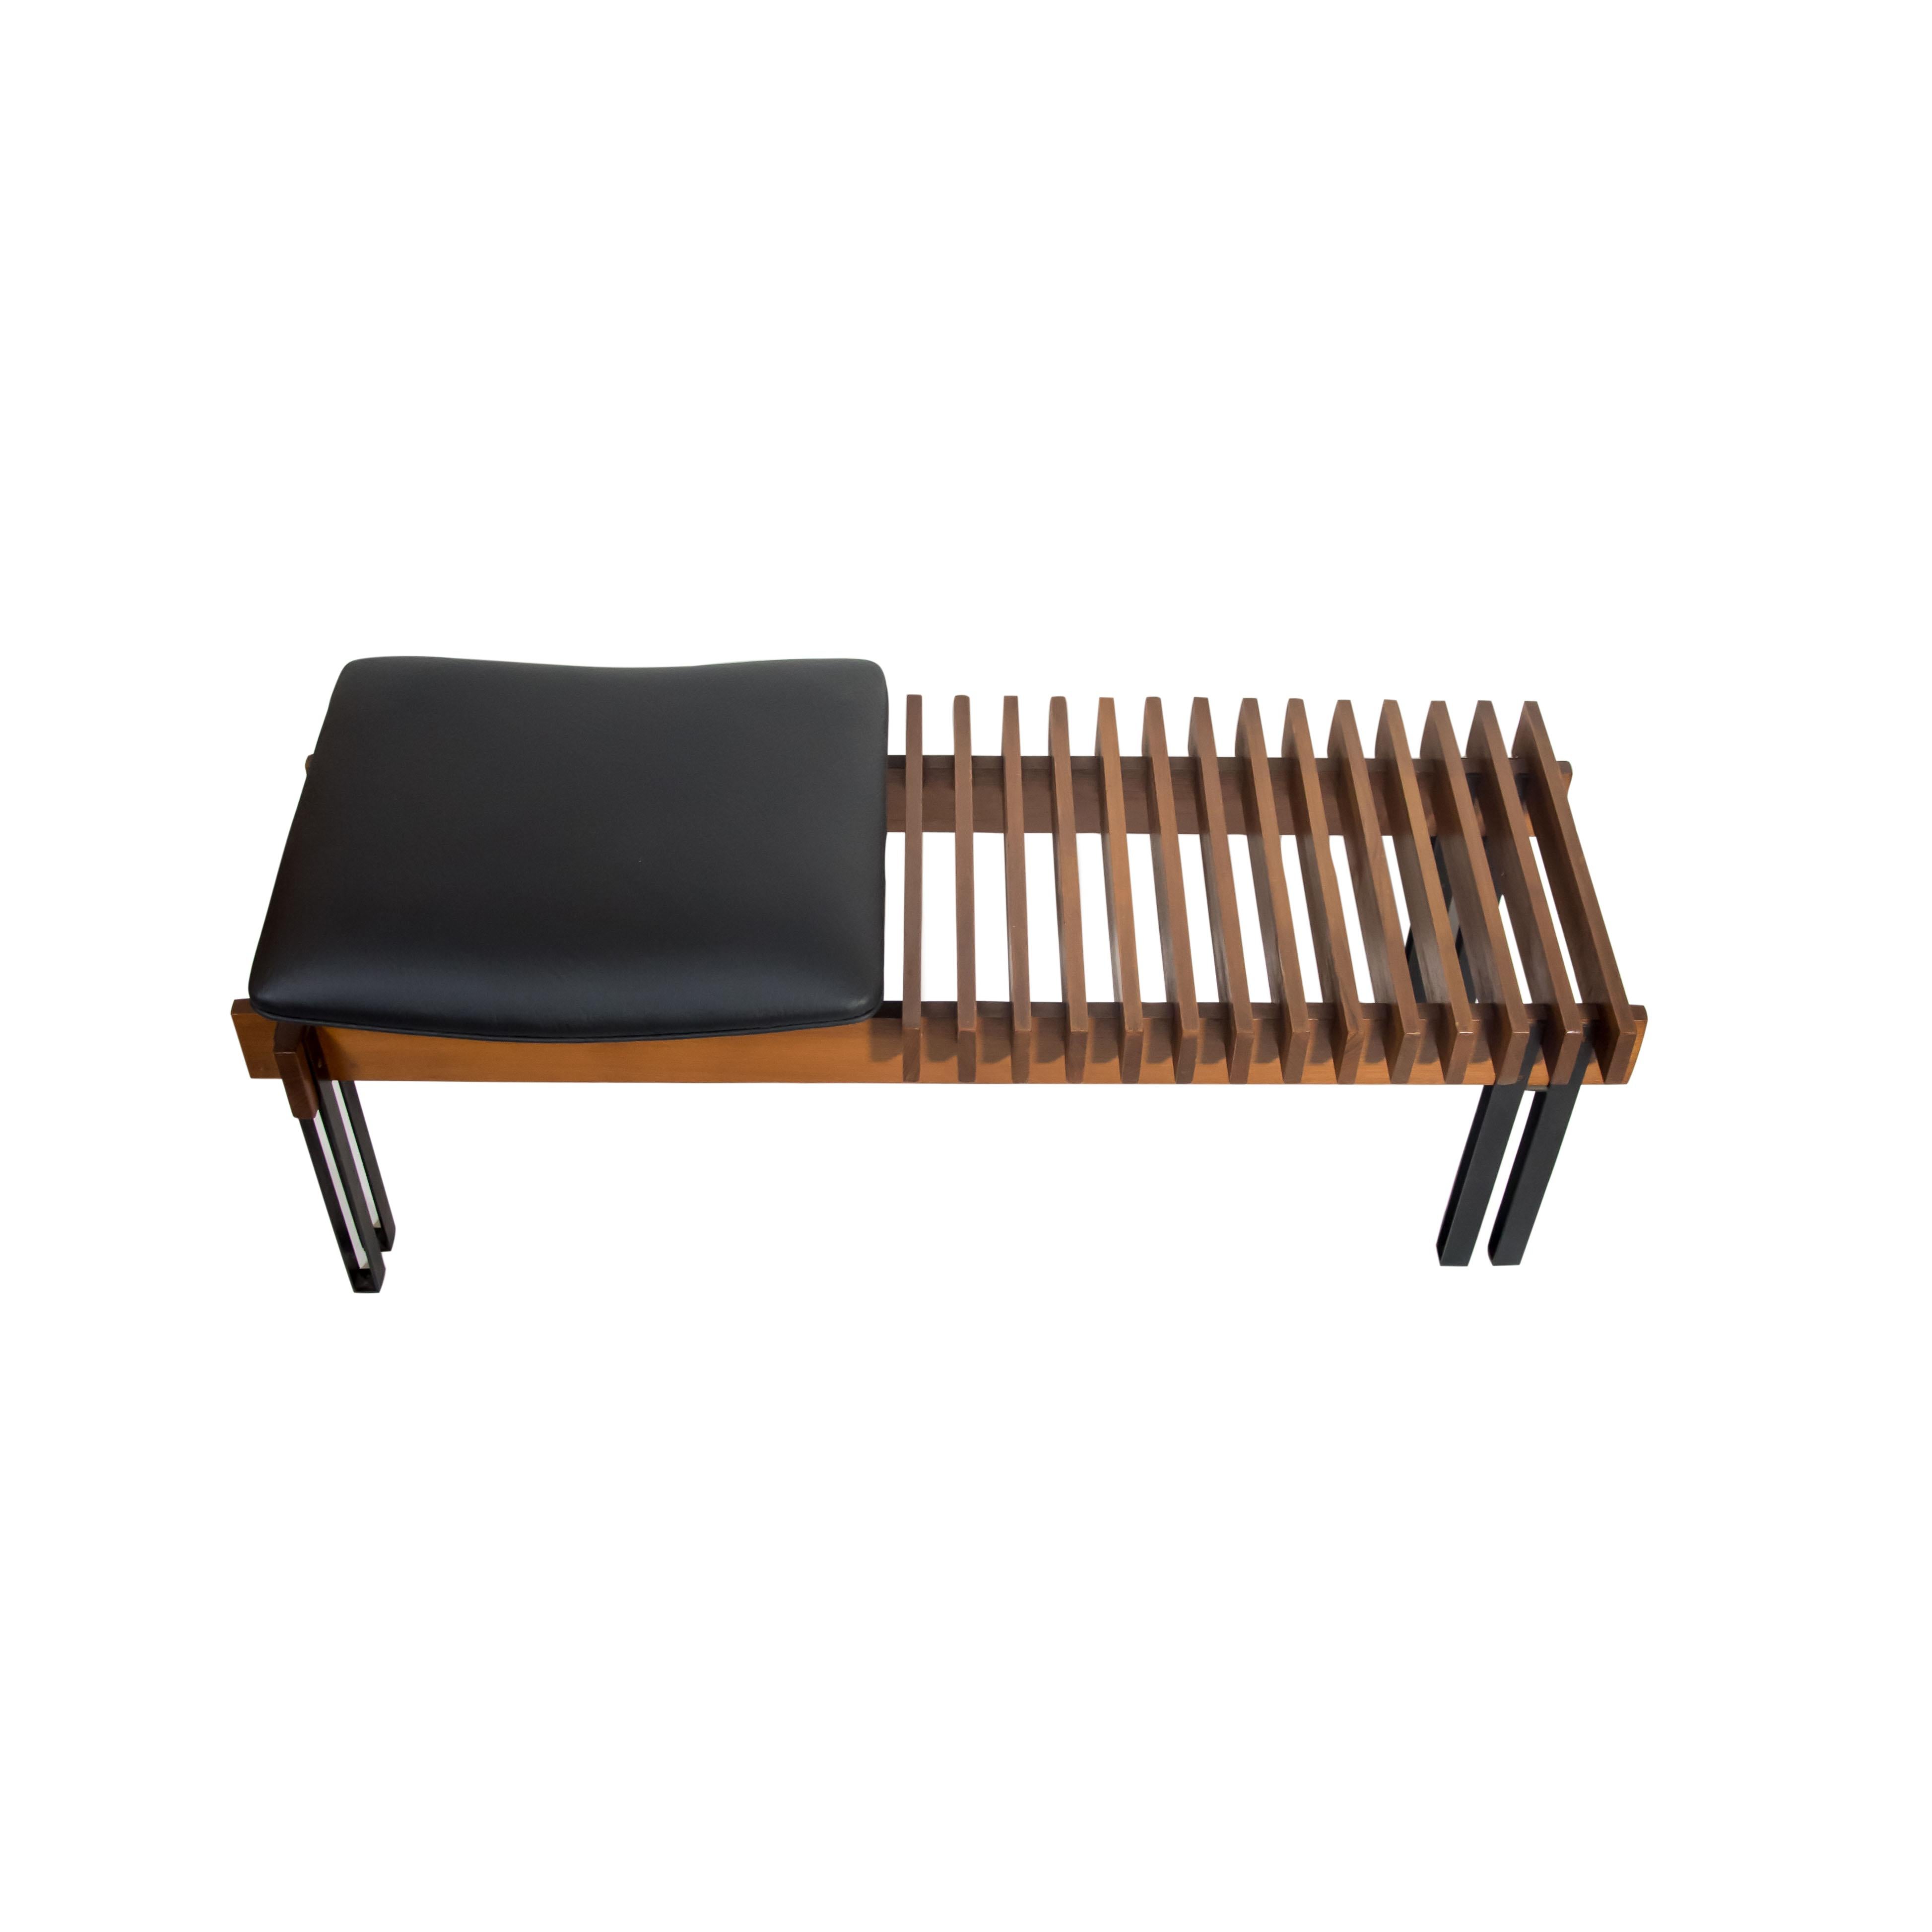 1960s Modernist Dark Wood & Leather Bench Italian Design Inge and Luciano Rubino 3